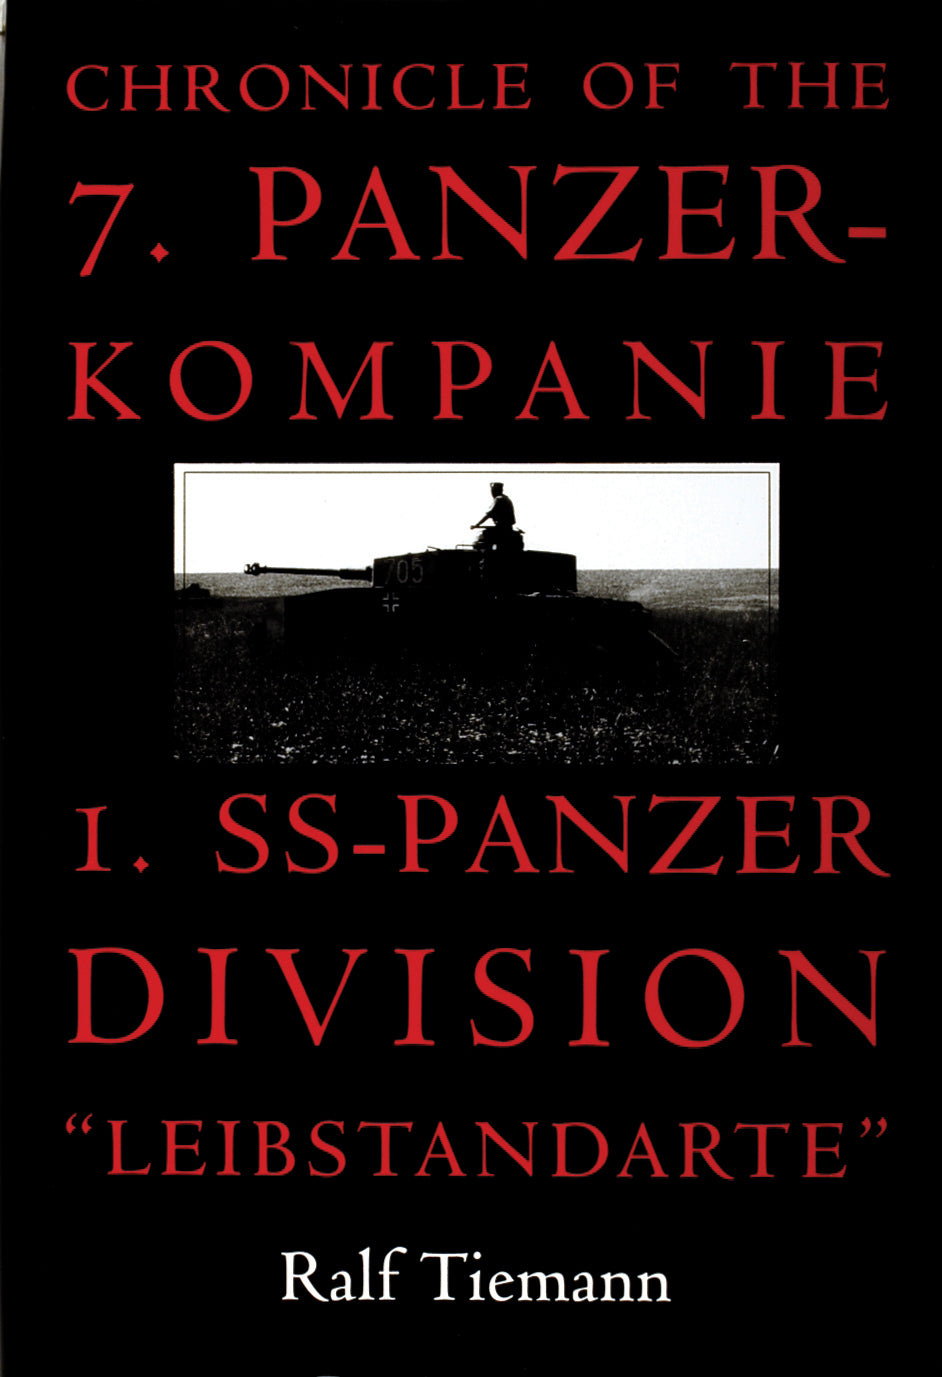 Chronicle of the 7. Panzer-kompanie 1. SS-Panzer Division "Leibstandarte"